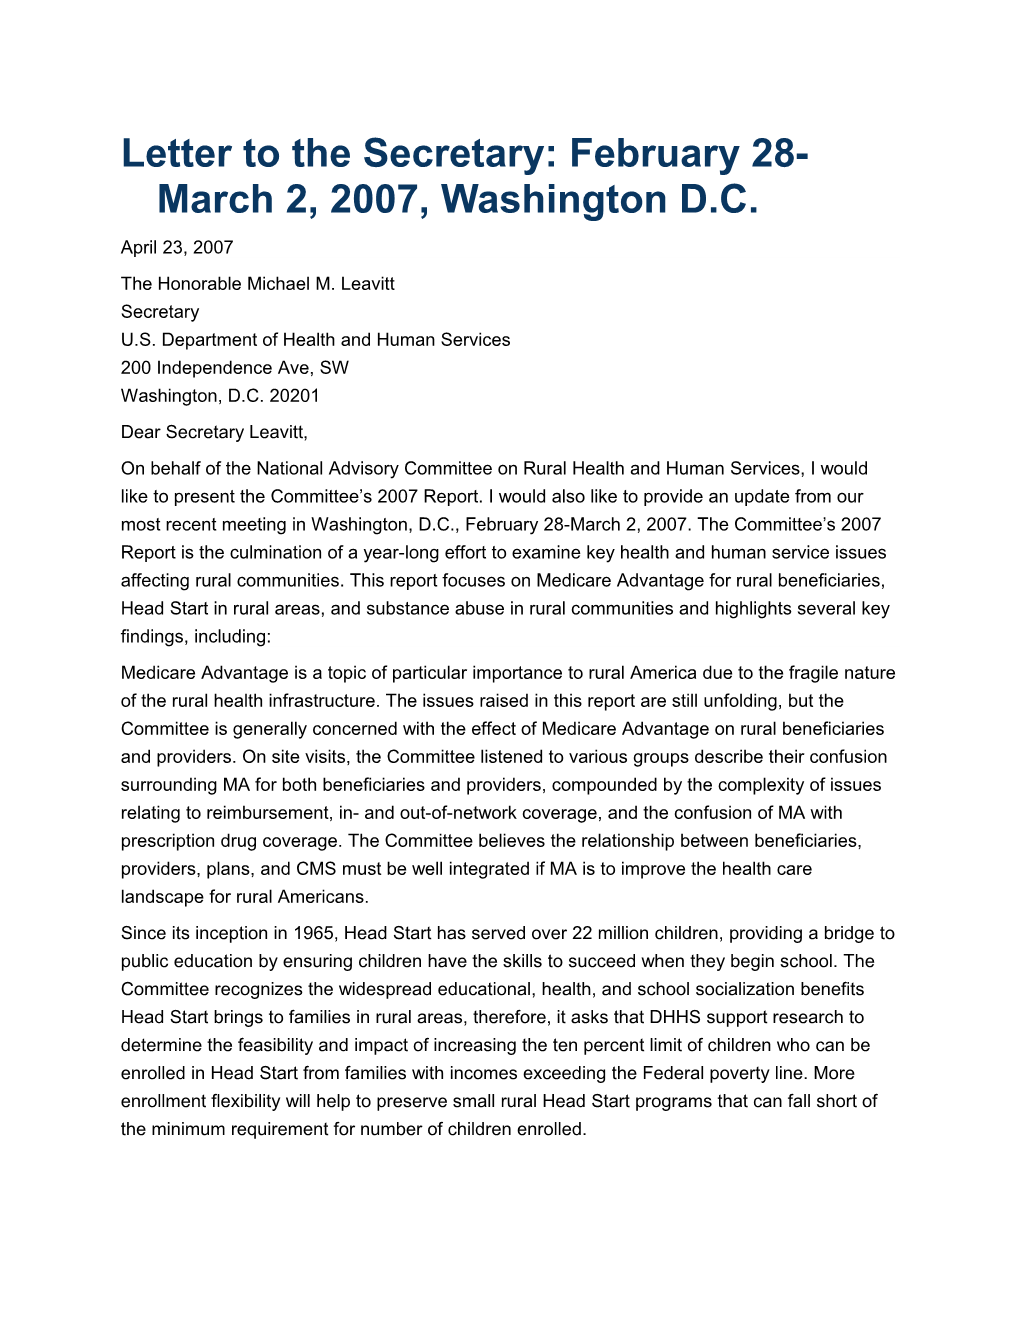 Letter to the Secretary: February 28-March 2, 2007, Washington D.C